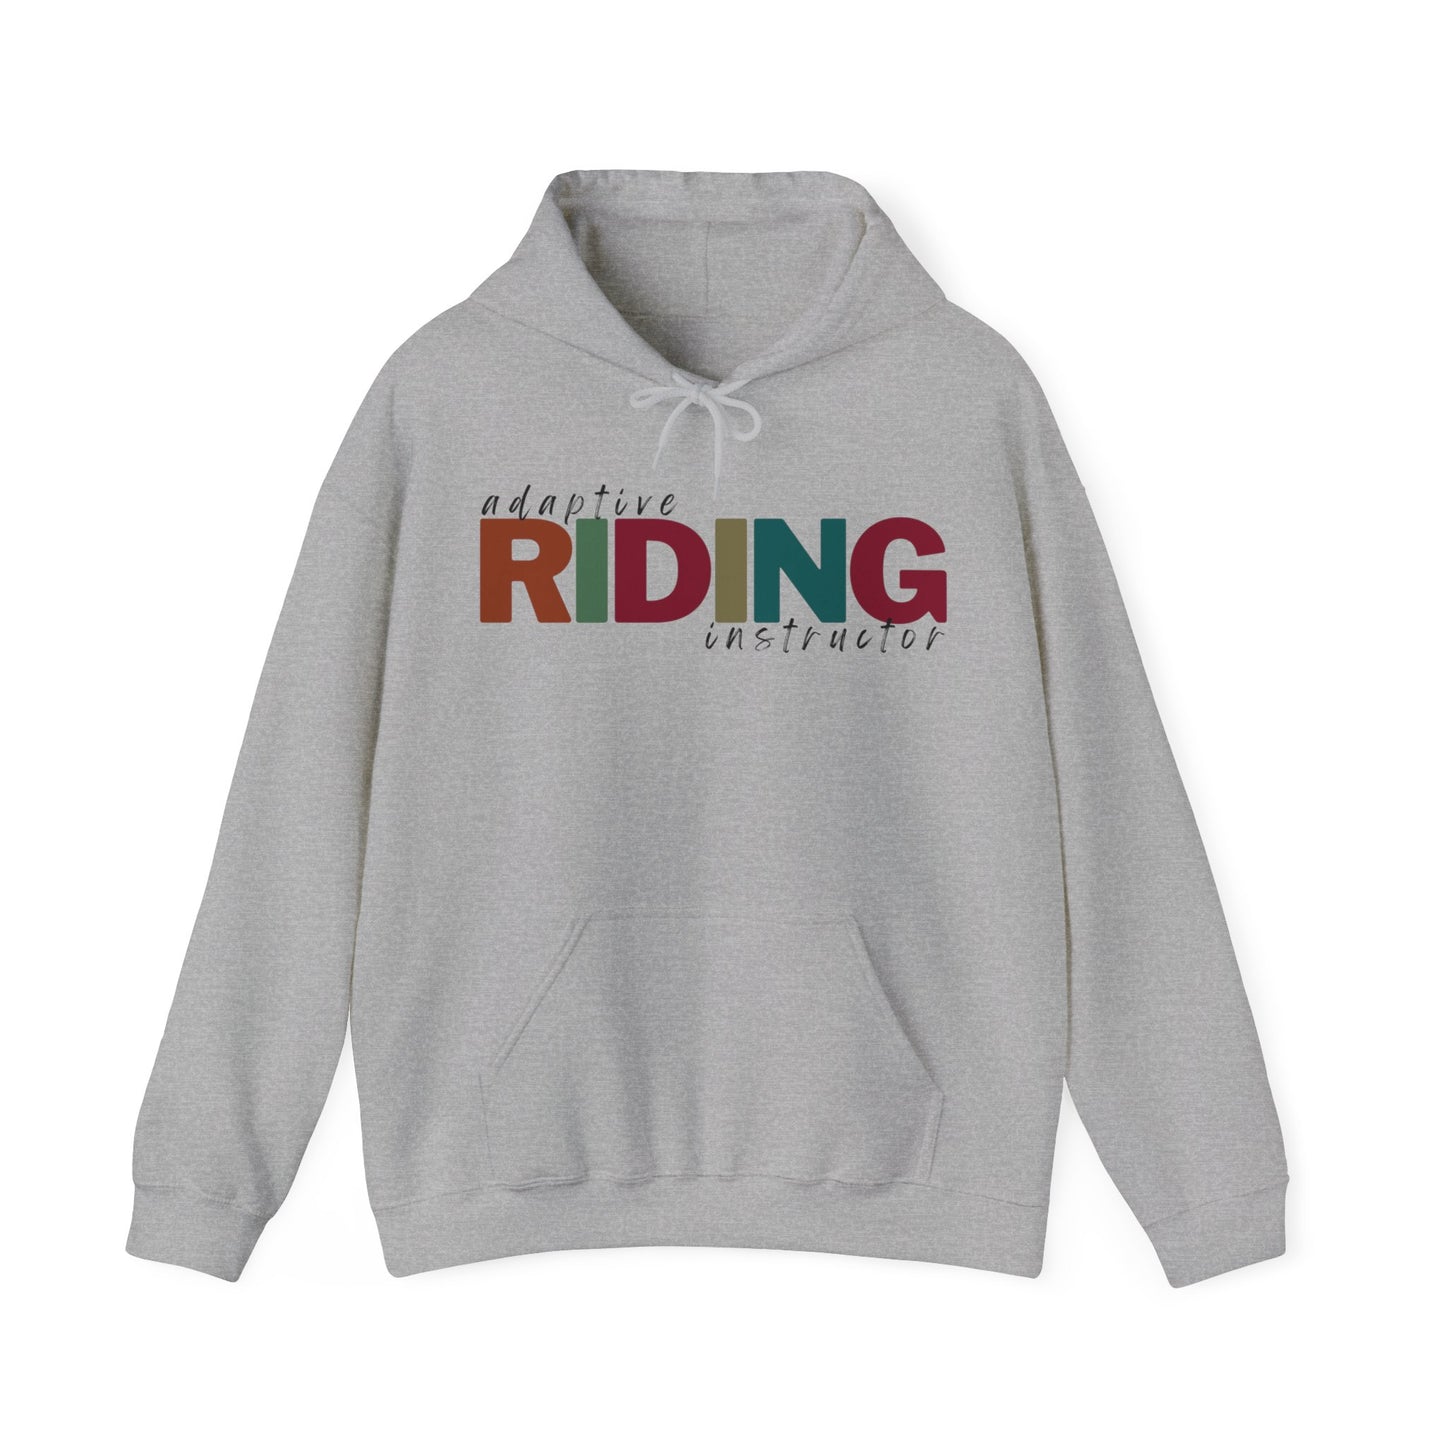 Adaptive Riding Instructor hoodie- unisex fit hooded sweatshirt